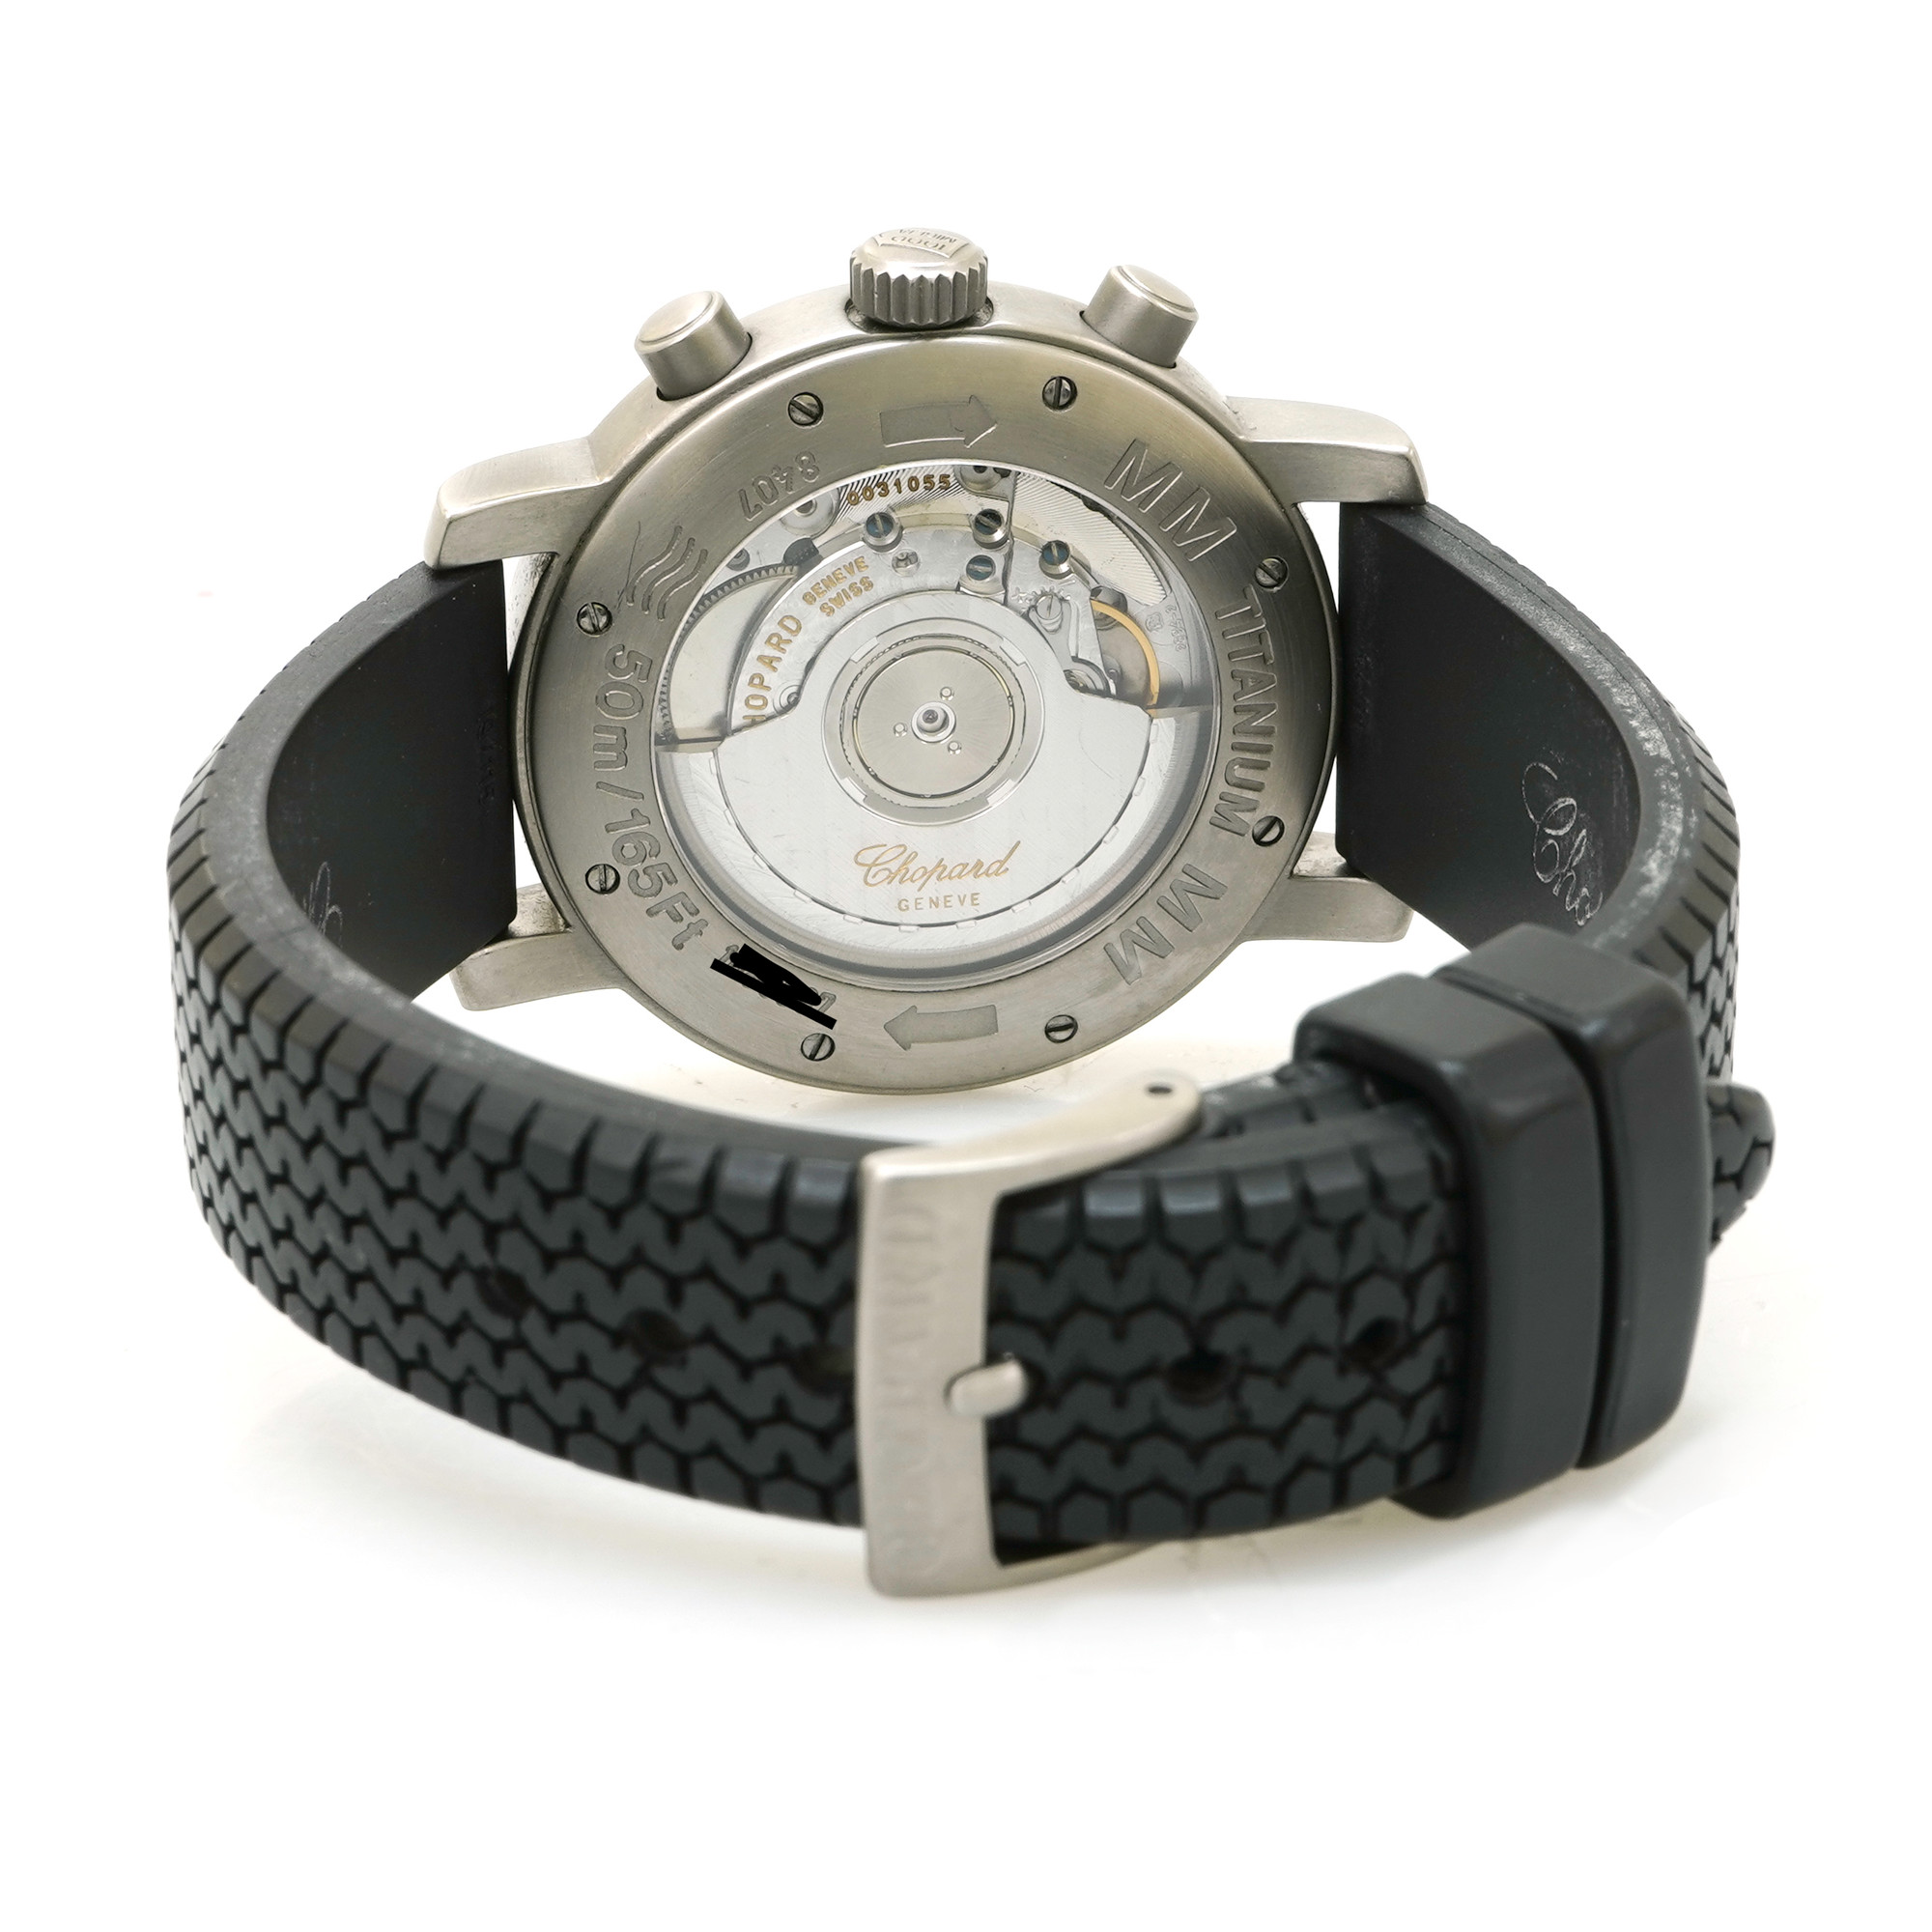 Chopard Mille Miglia Chronograph *Titanium* 8407 - Inventory 3611